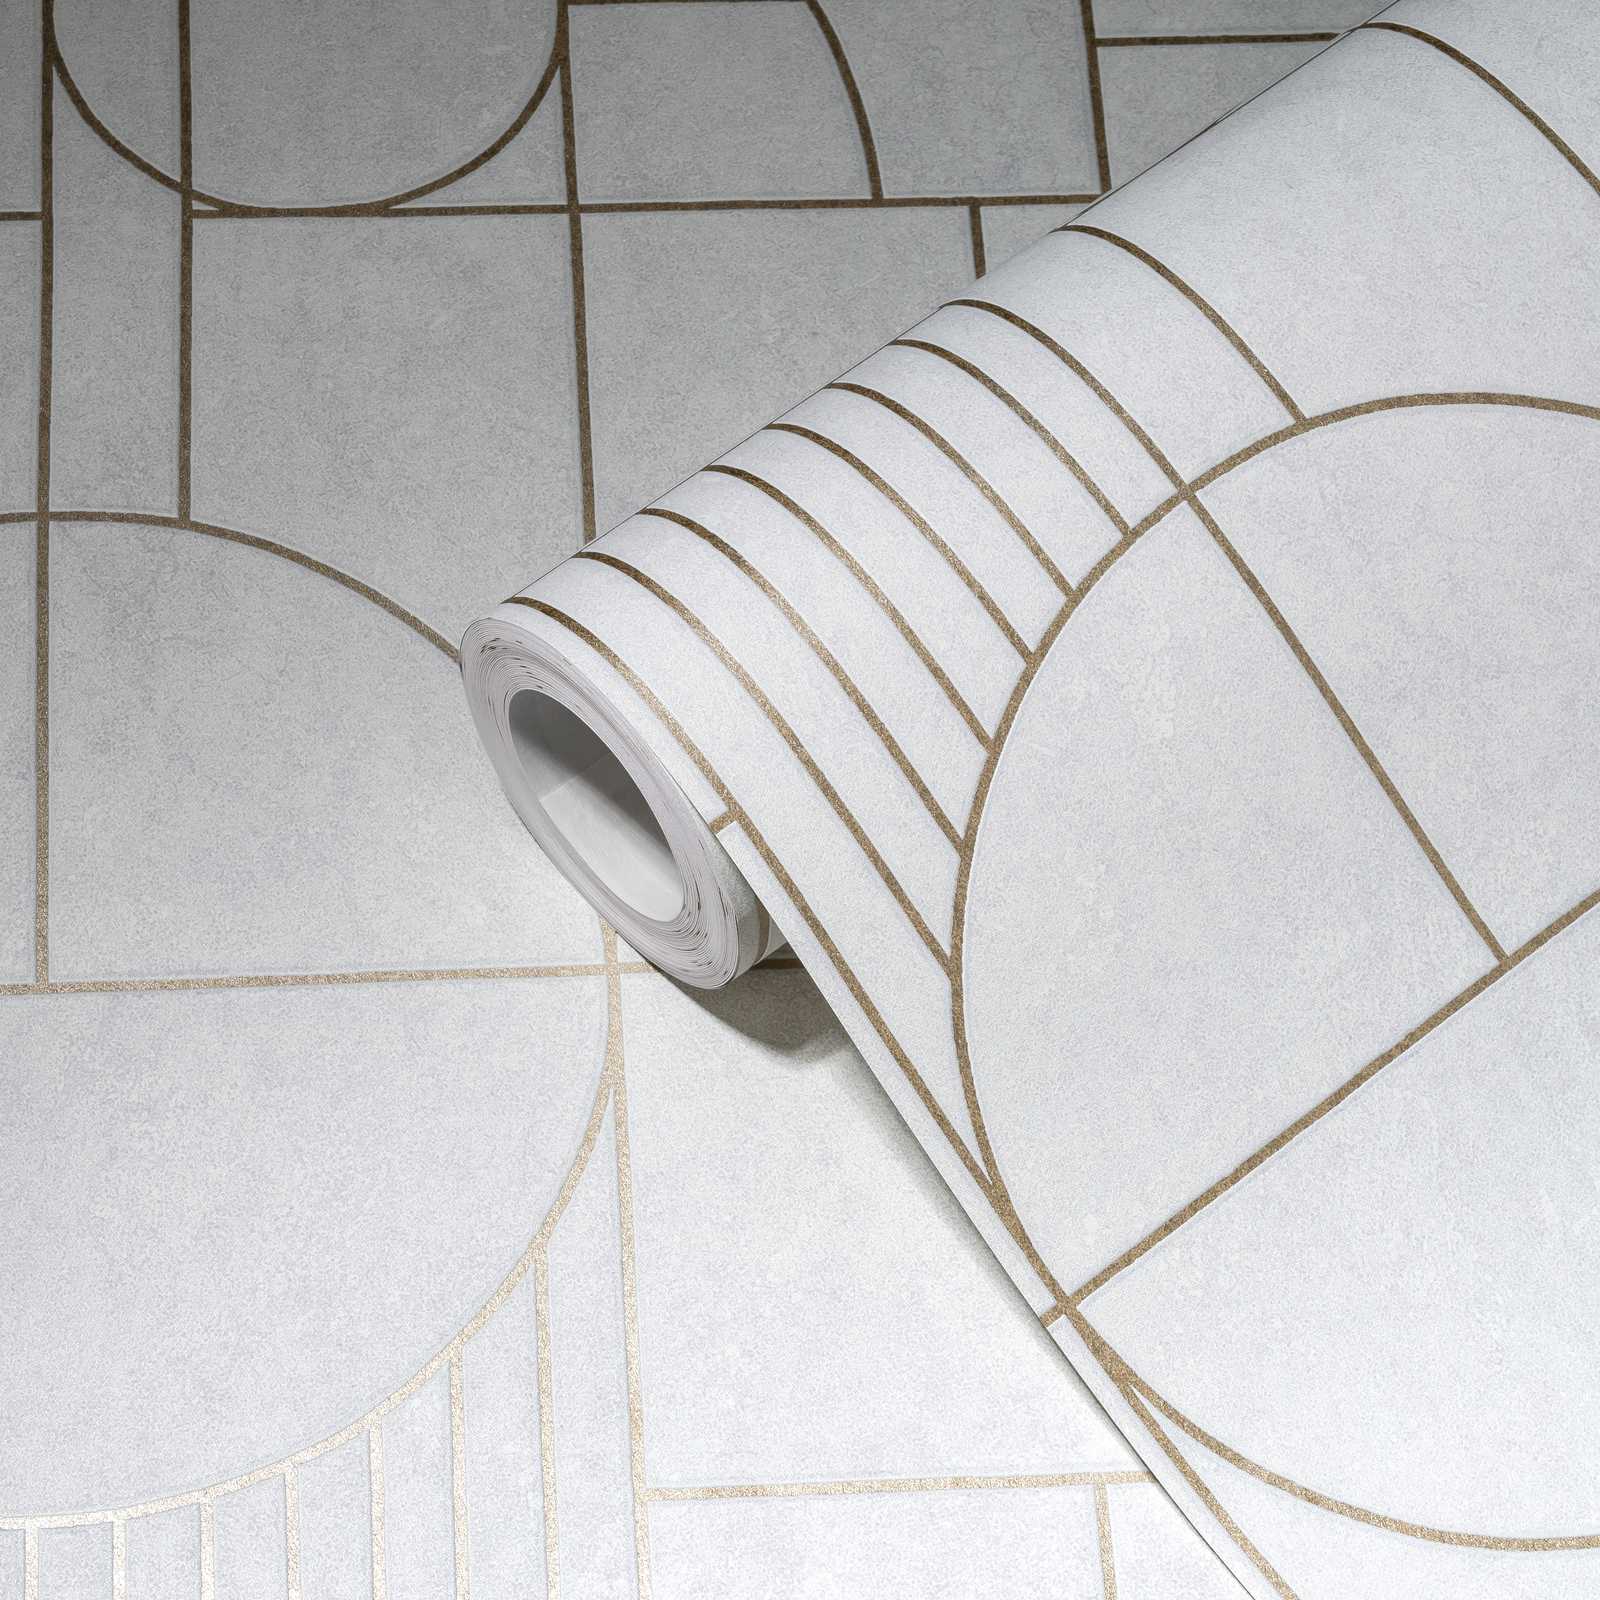             Tile look wallpaper art deco design marbled - metallic, white
        